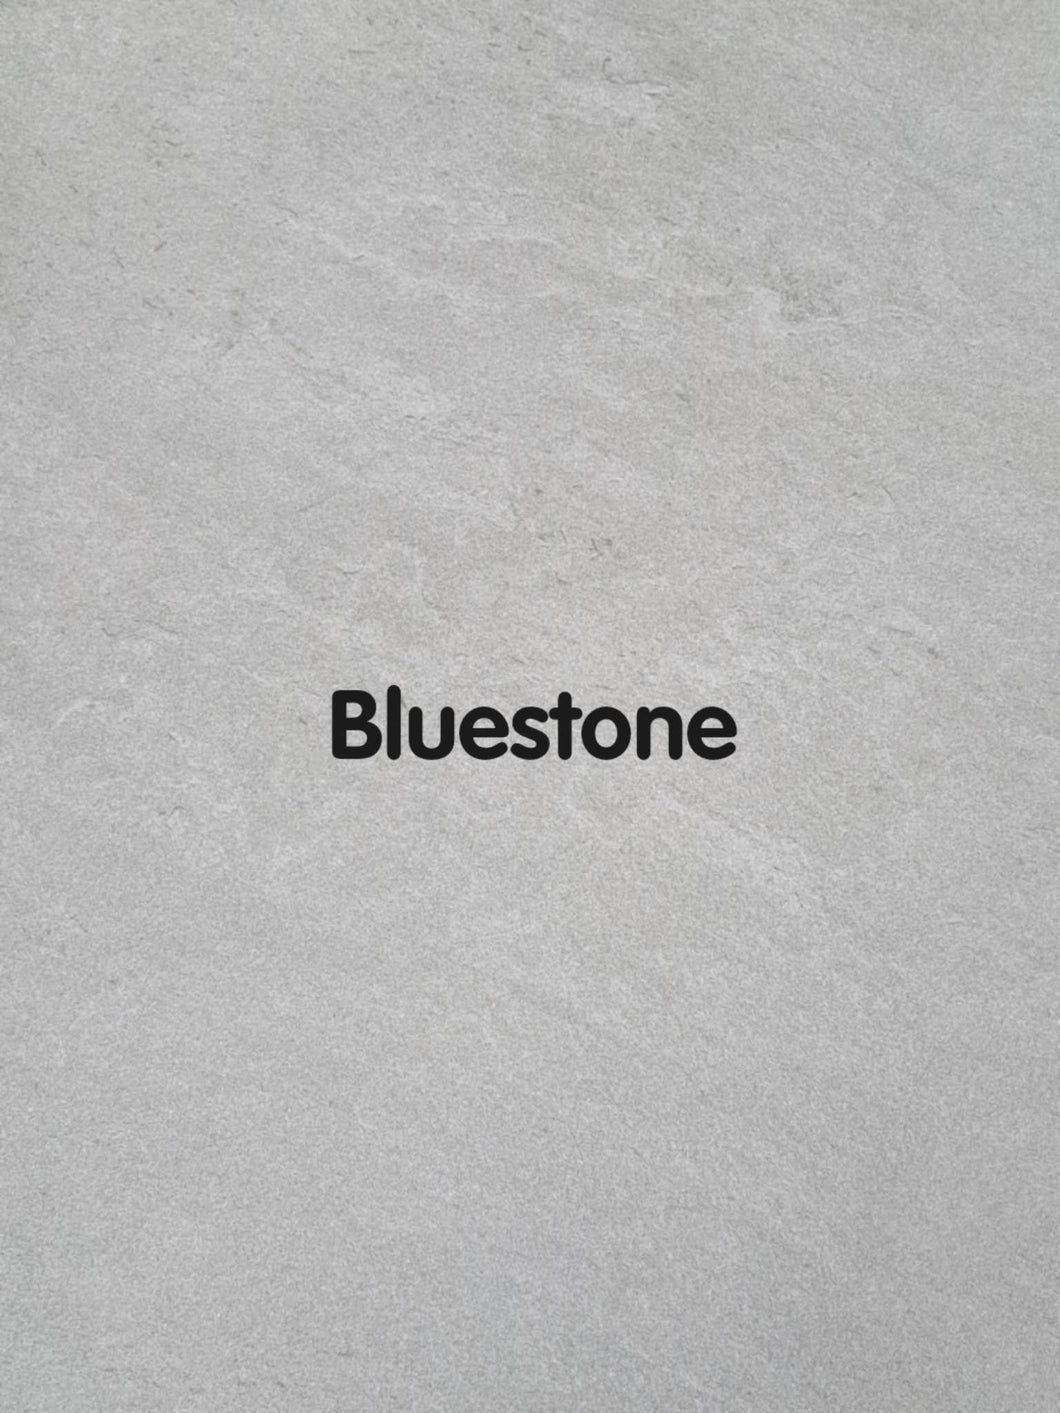 Bluestone.jpg